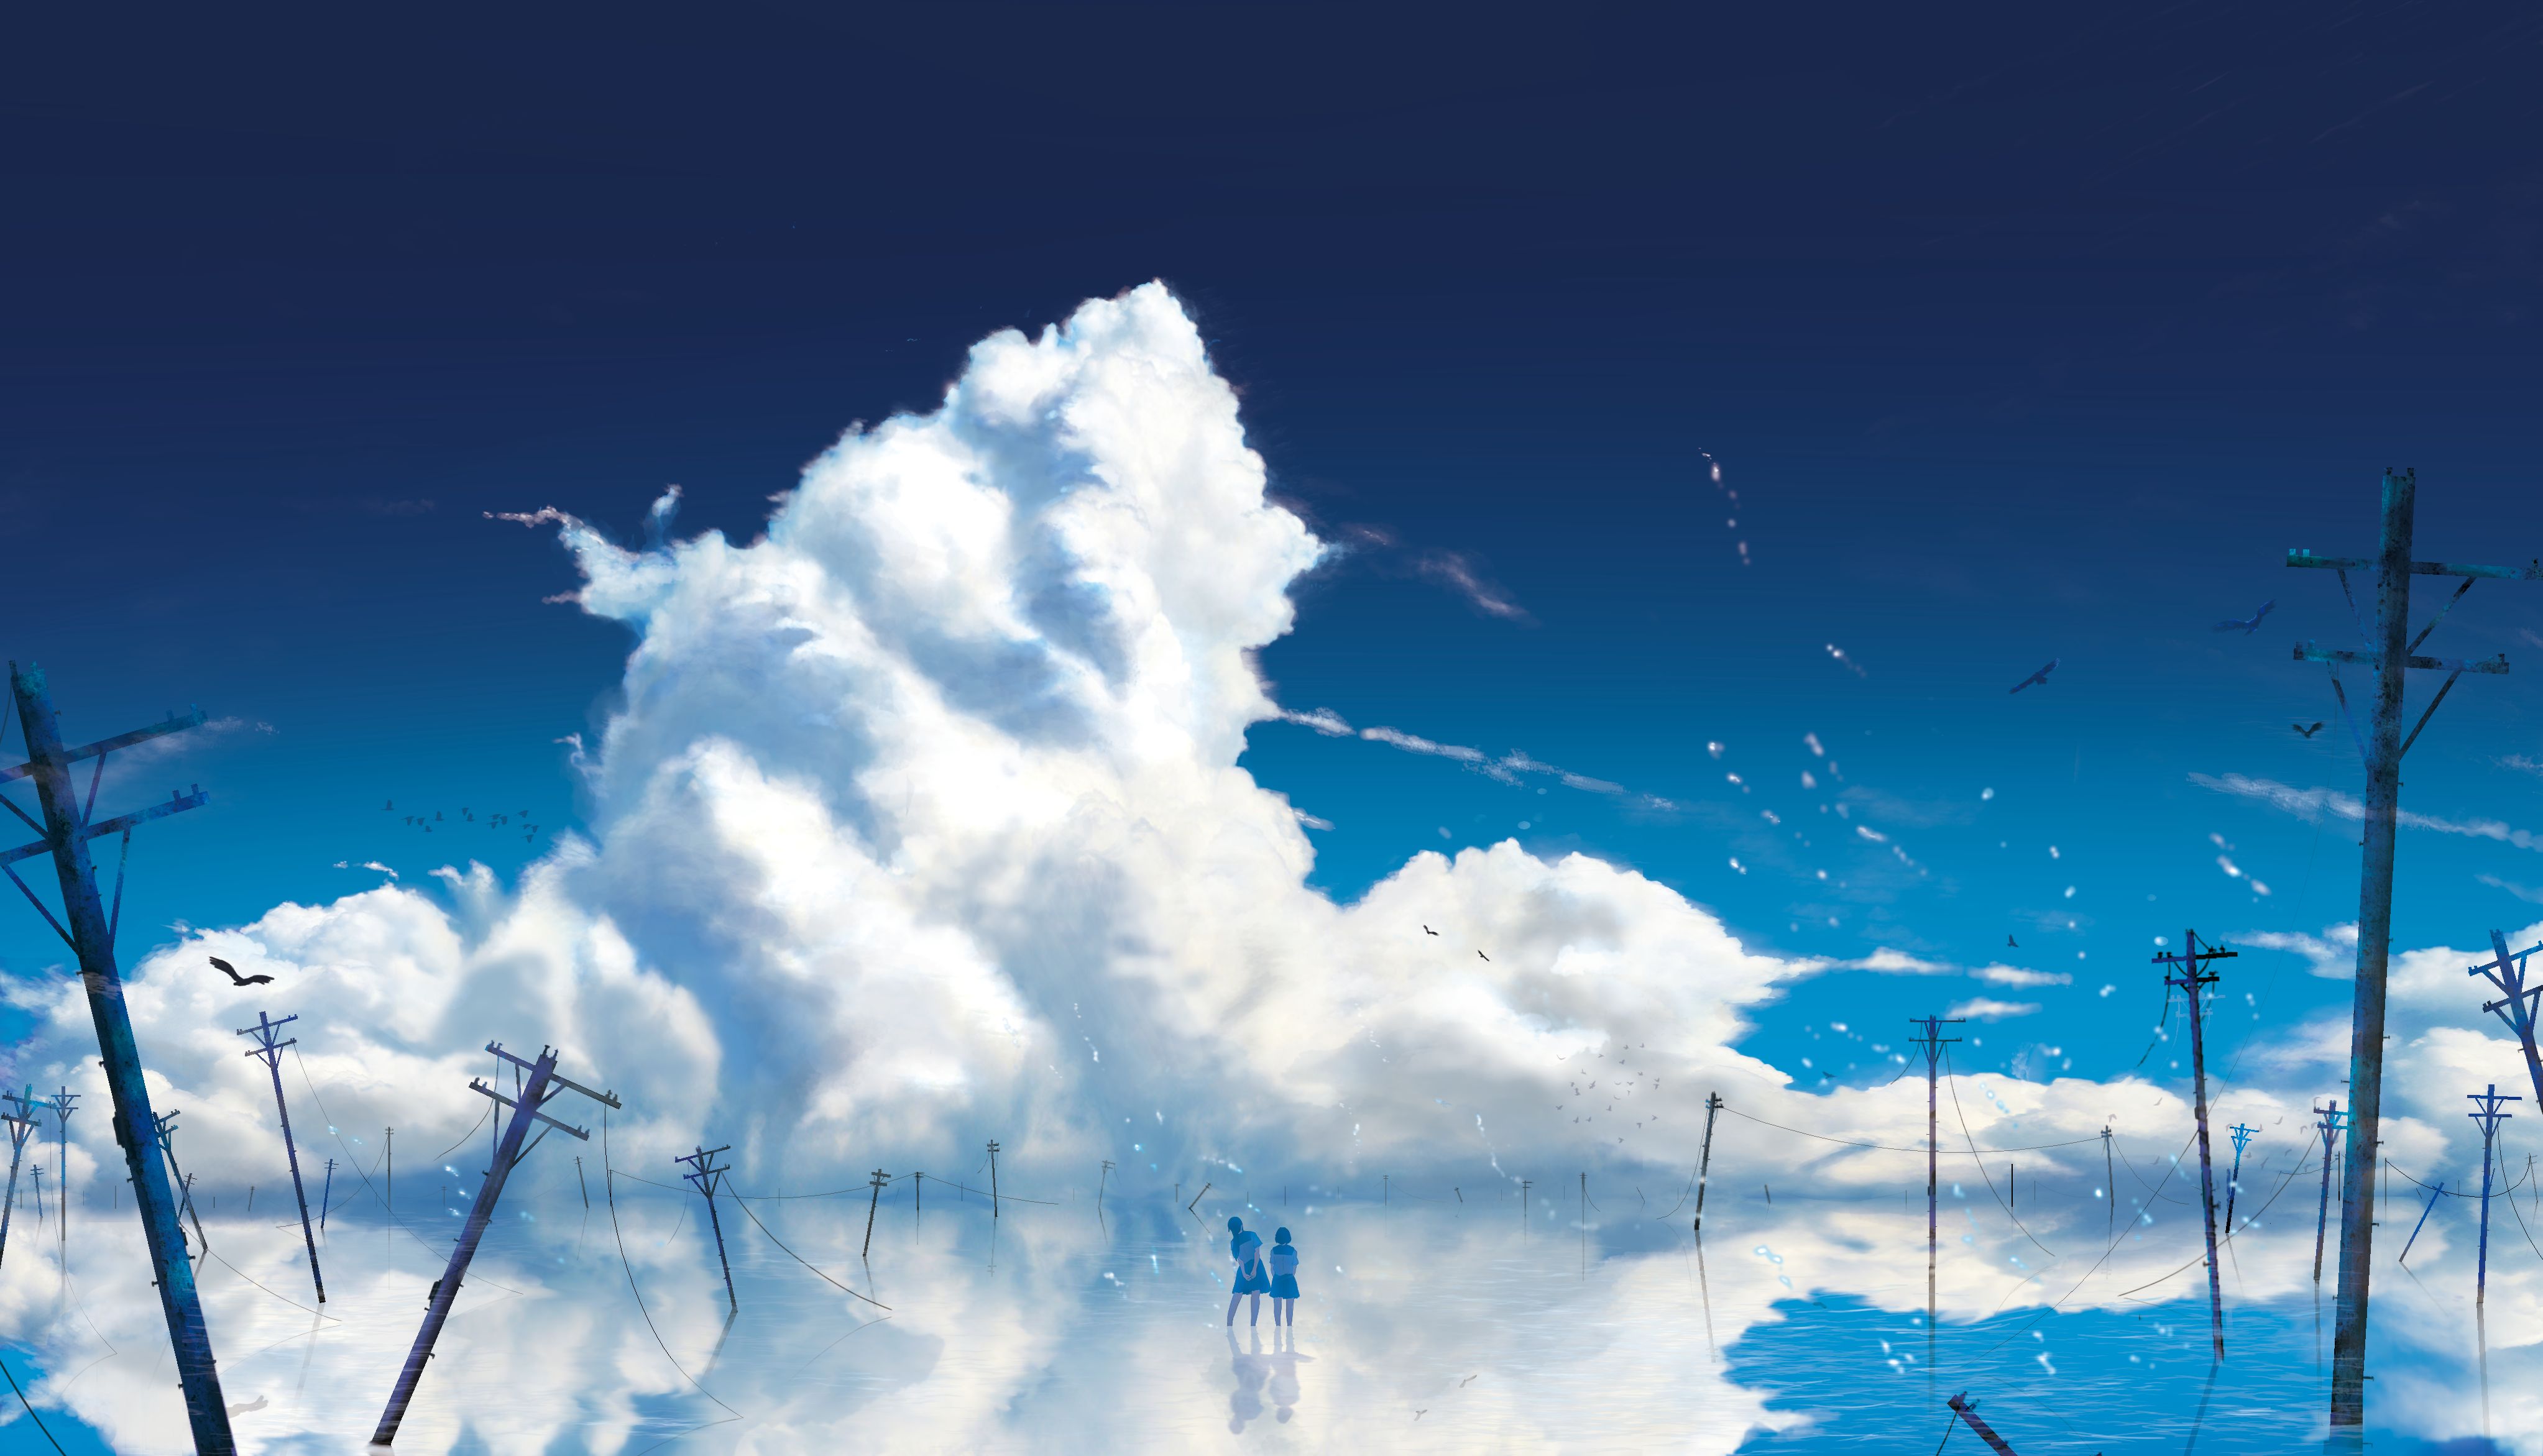 Anime Girl Water Horizon Blue Sky Background Reflection 4K HD Anime Girl  Wallpapers  HD Wallpapers  ID 101616